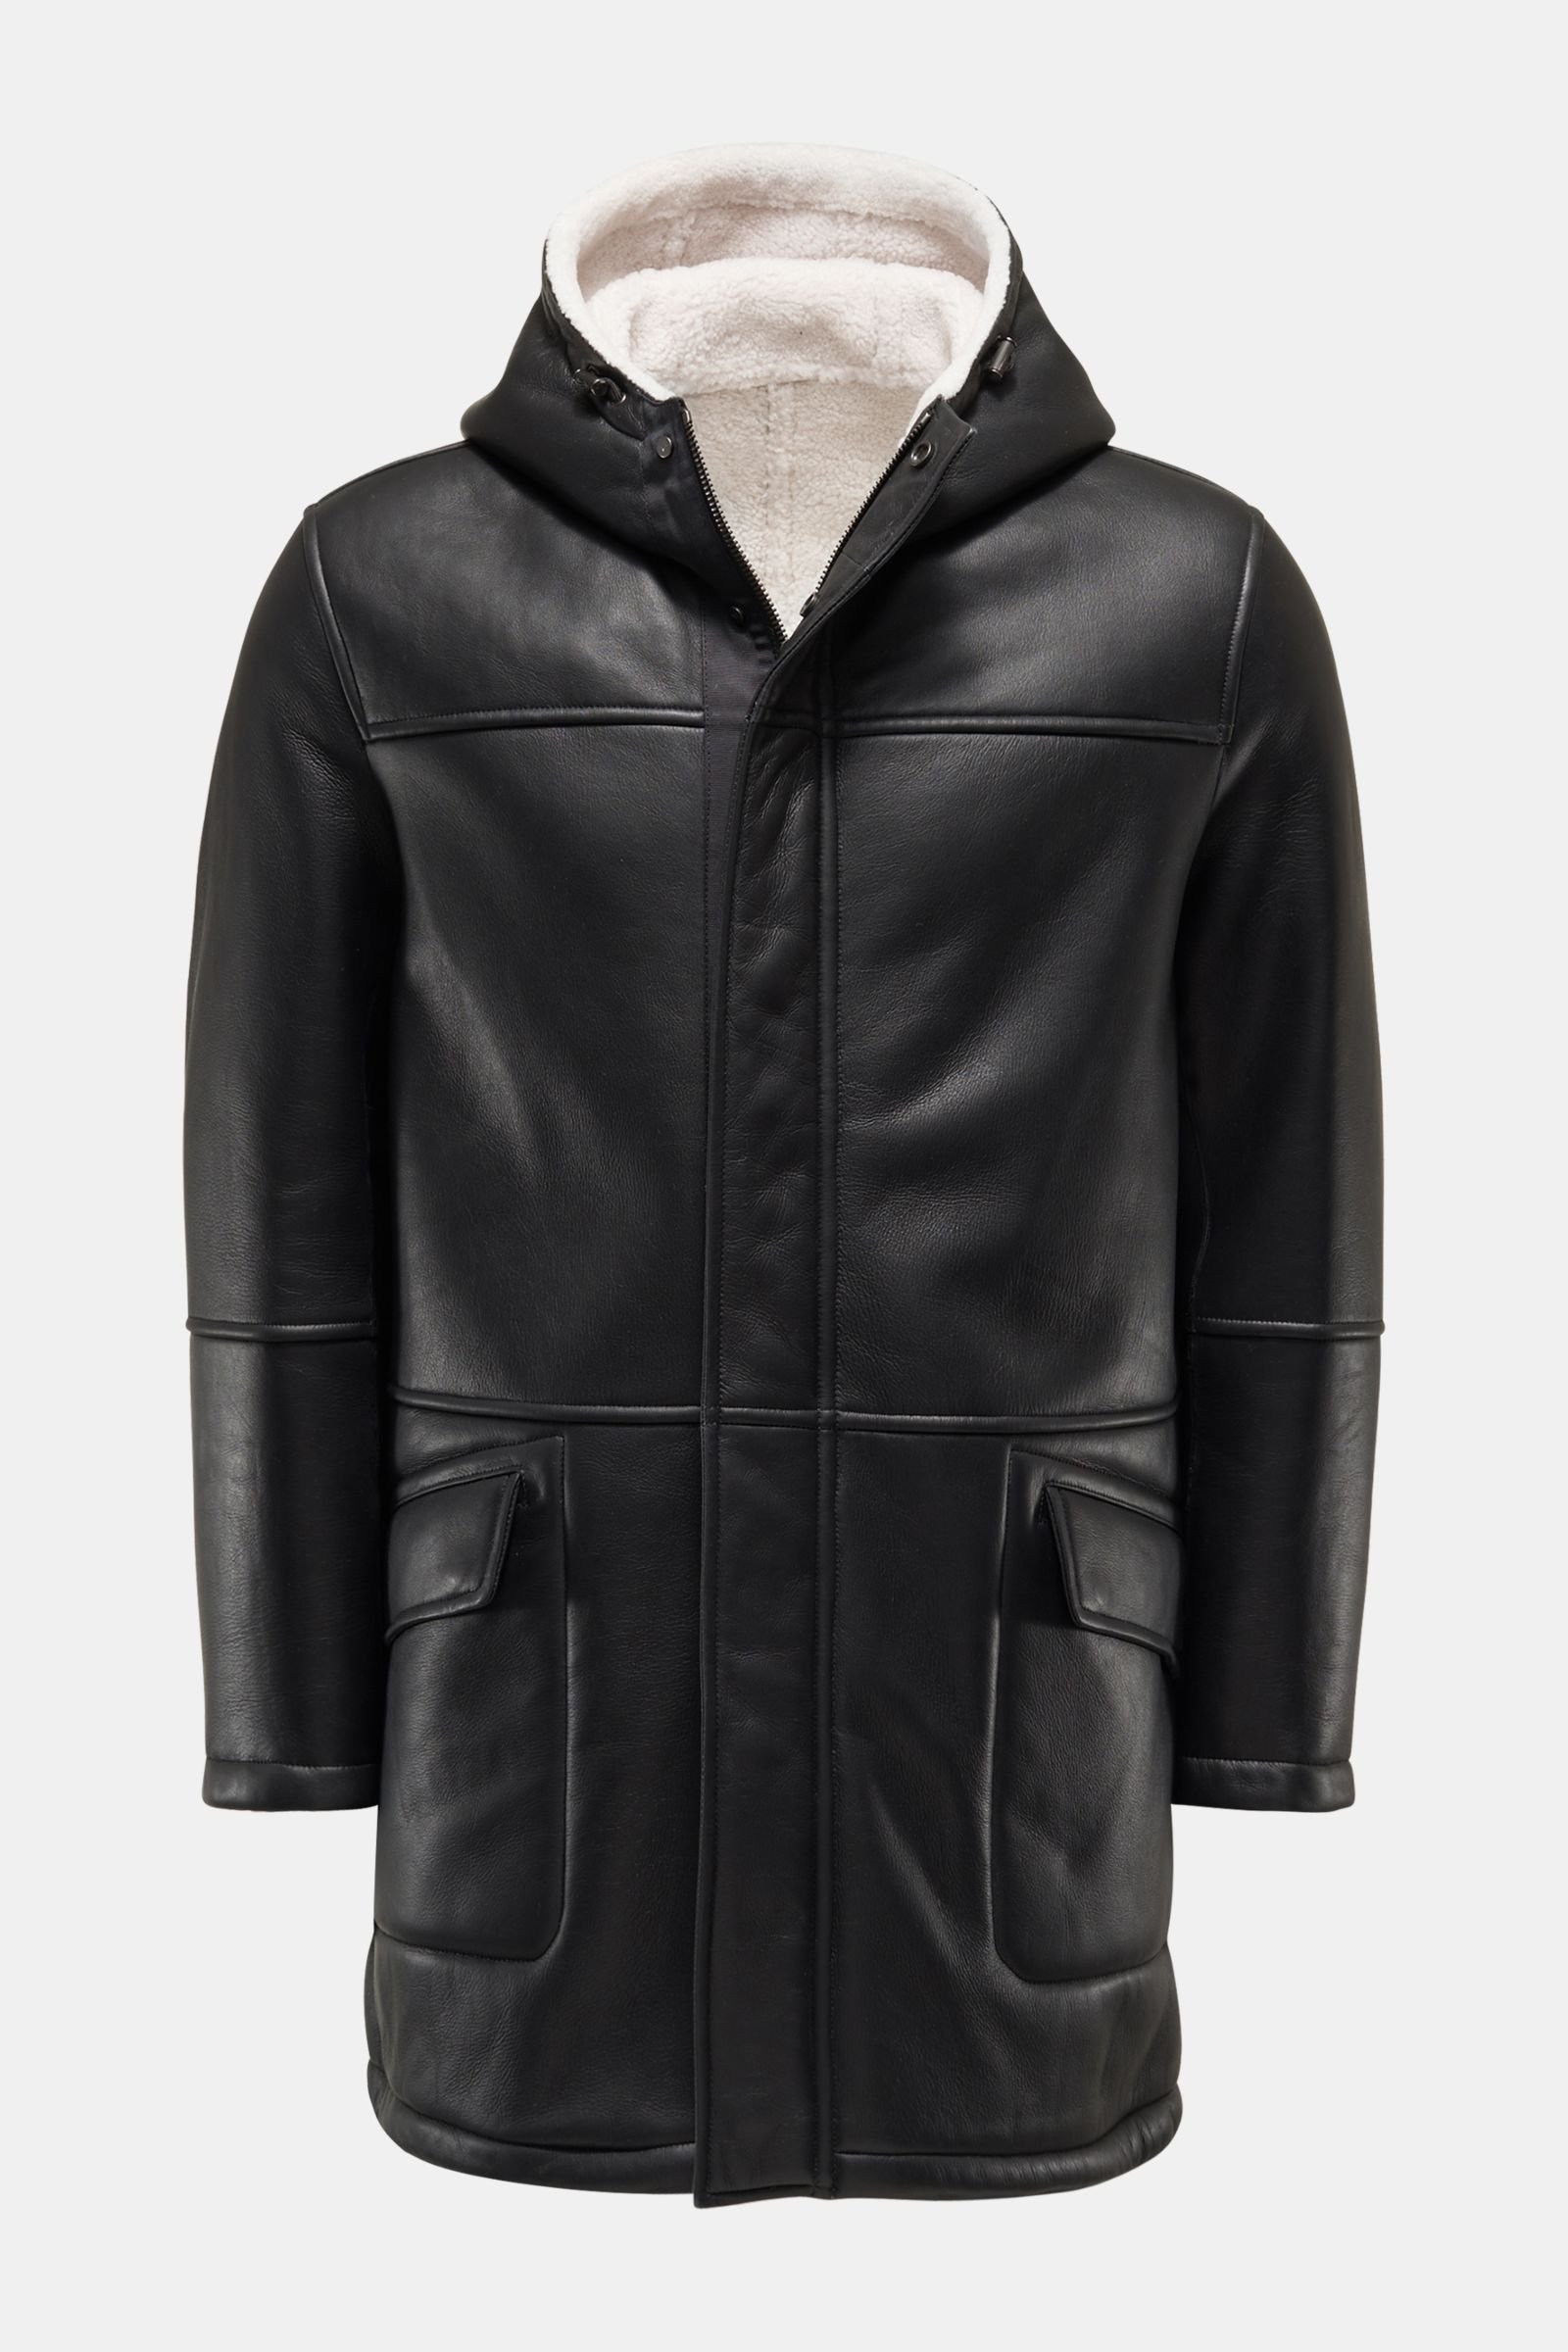 Shearling coat black